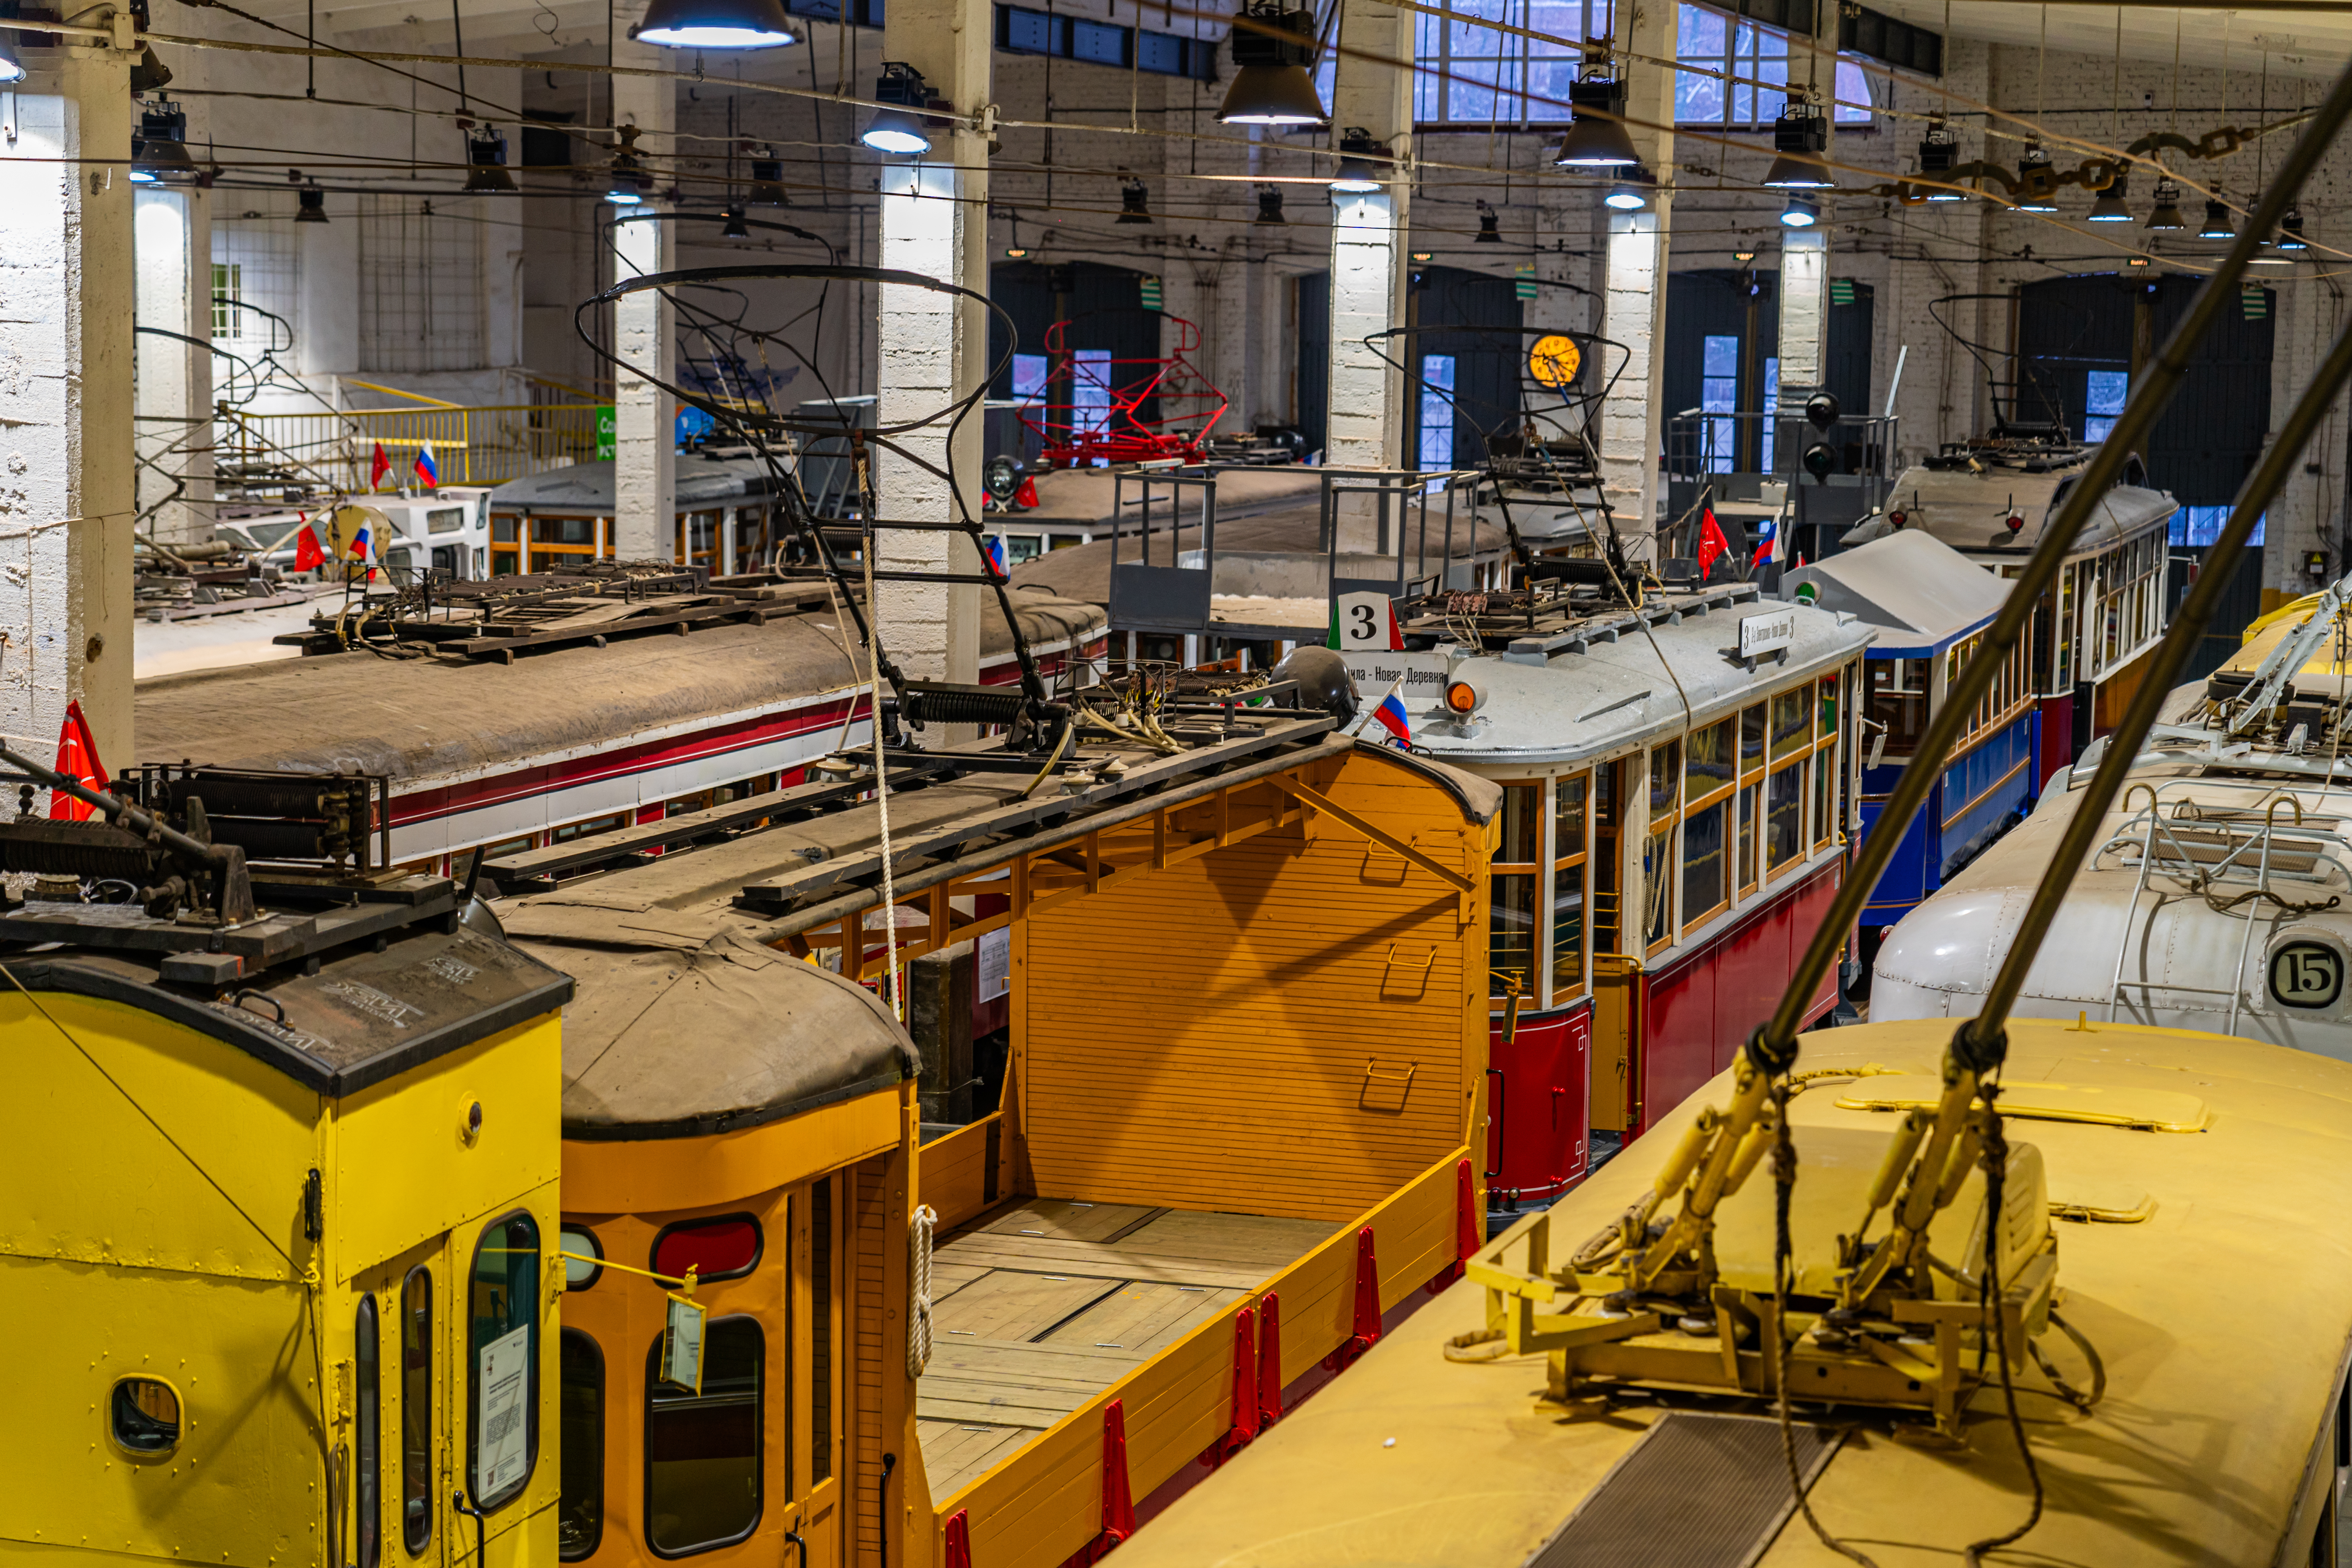 Saint Petersburg Museum of Electric Transport